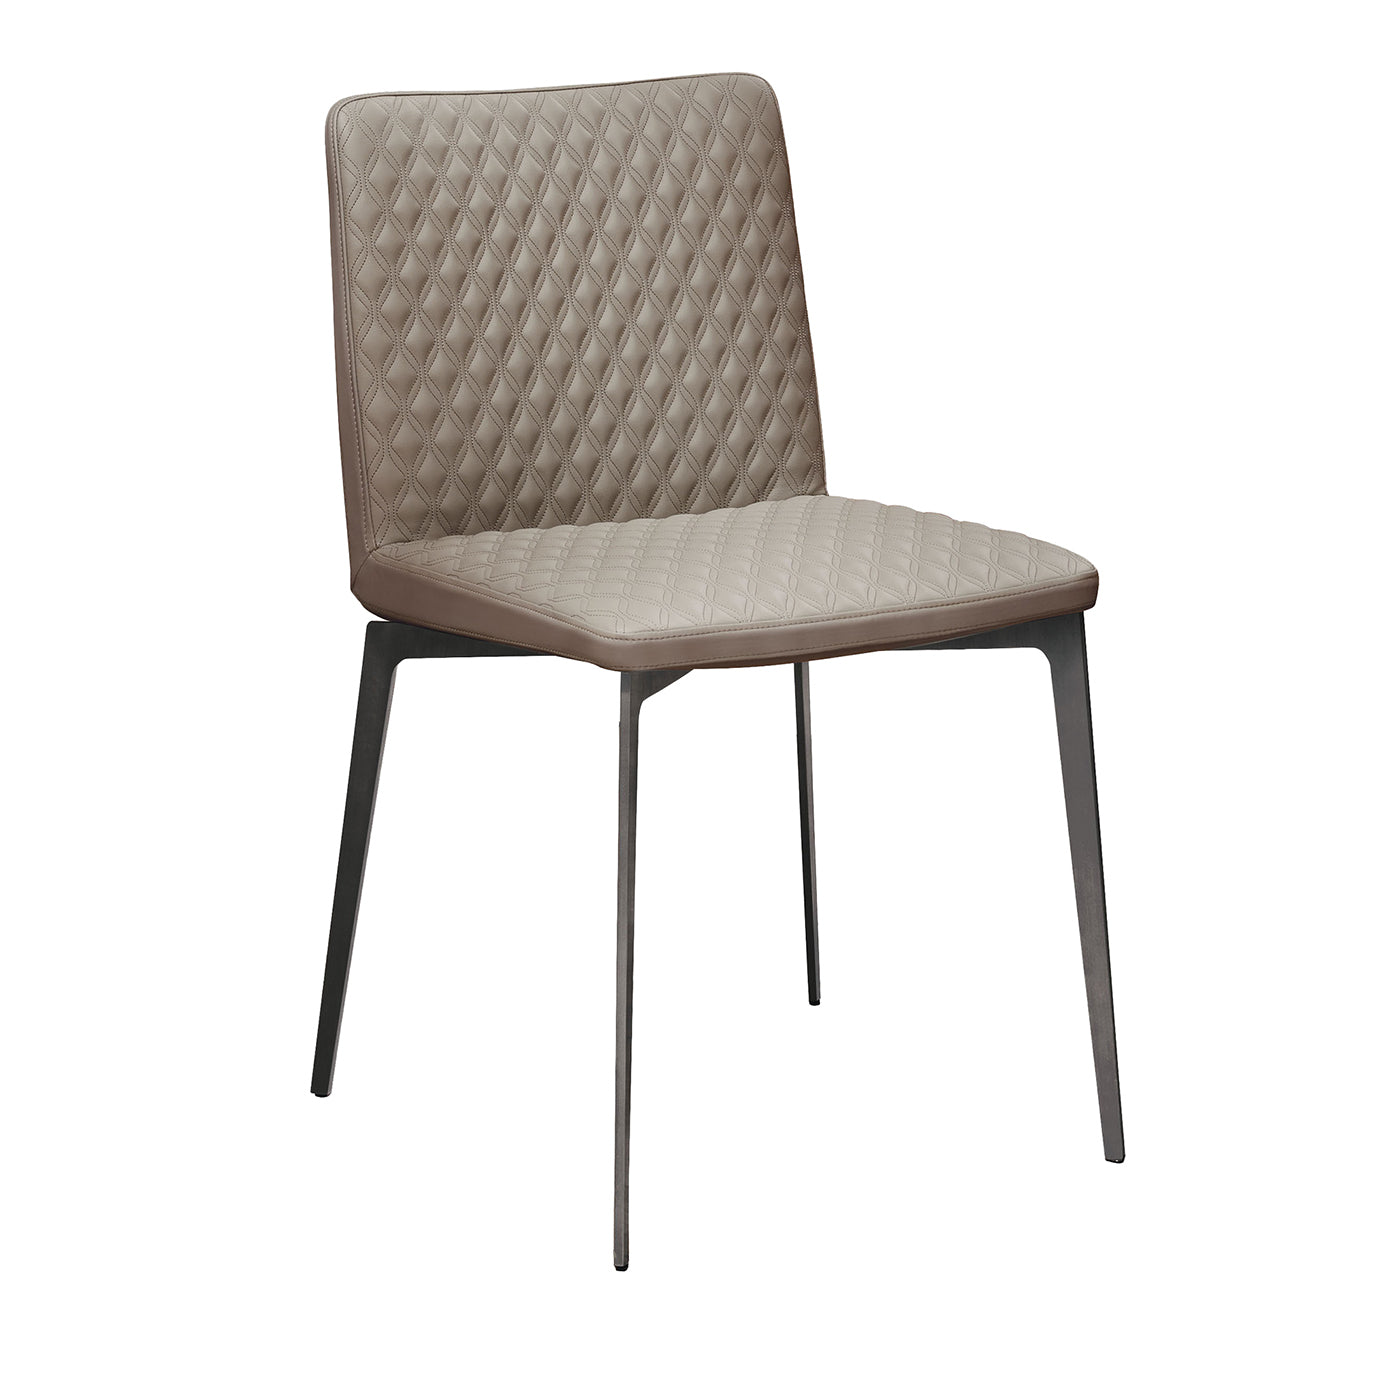 Flexa Diamond-Quilted Beige Leather Chair by Giuseppe Bavuso - Main view